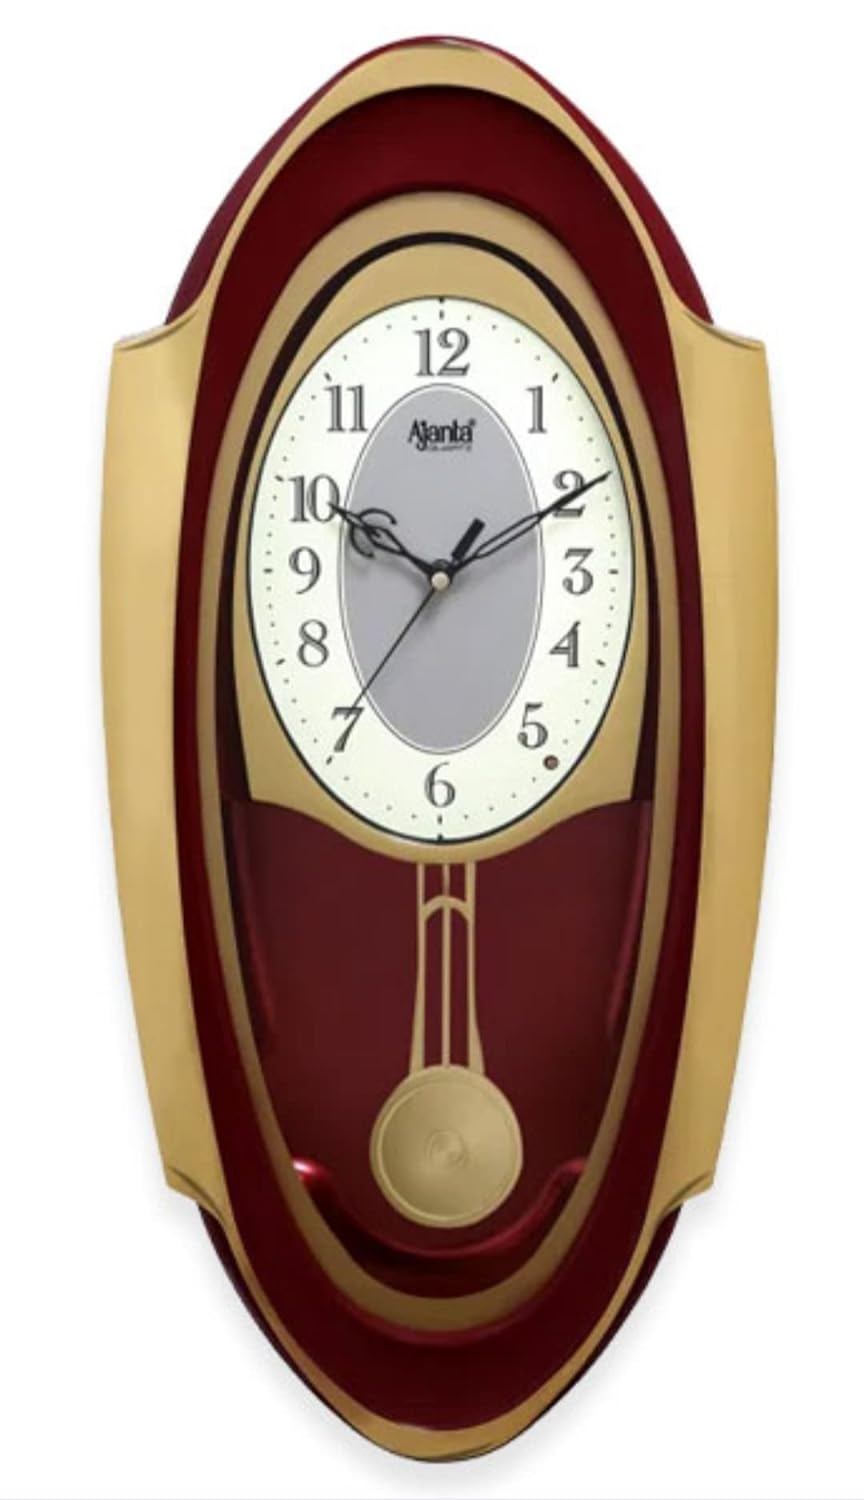 Musical Pendulum Wall Clock